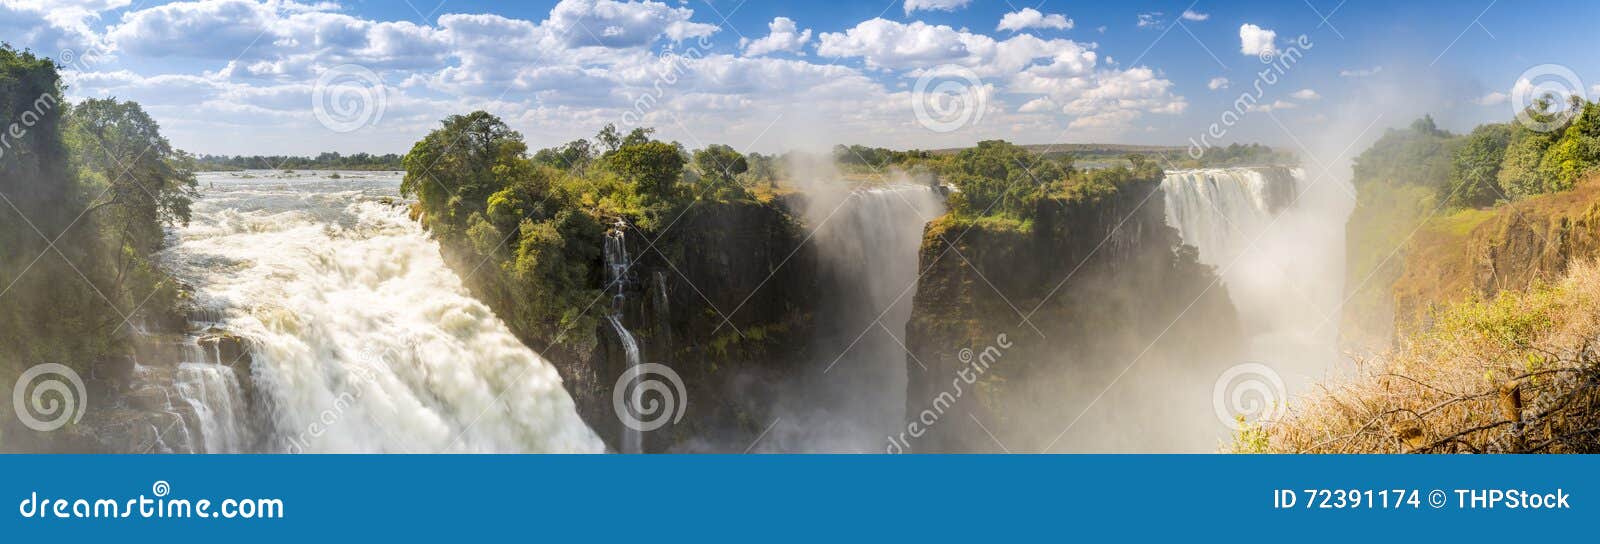 victoria falls waterfall between zimbabwe and zambia in africa